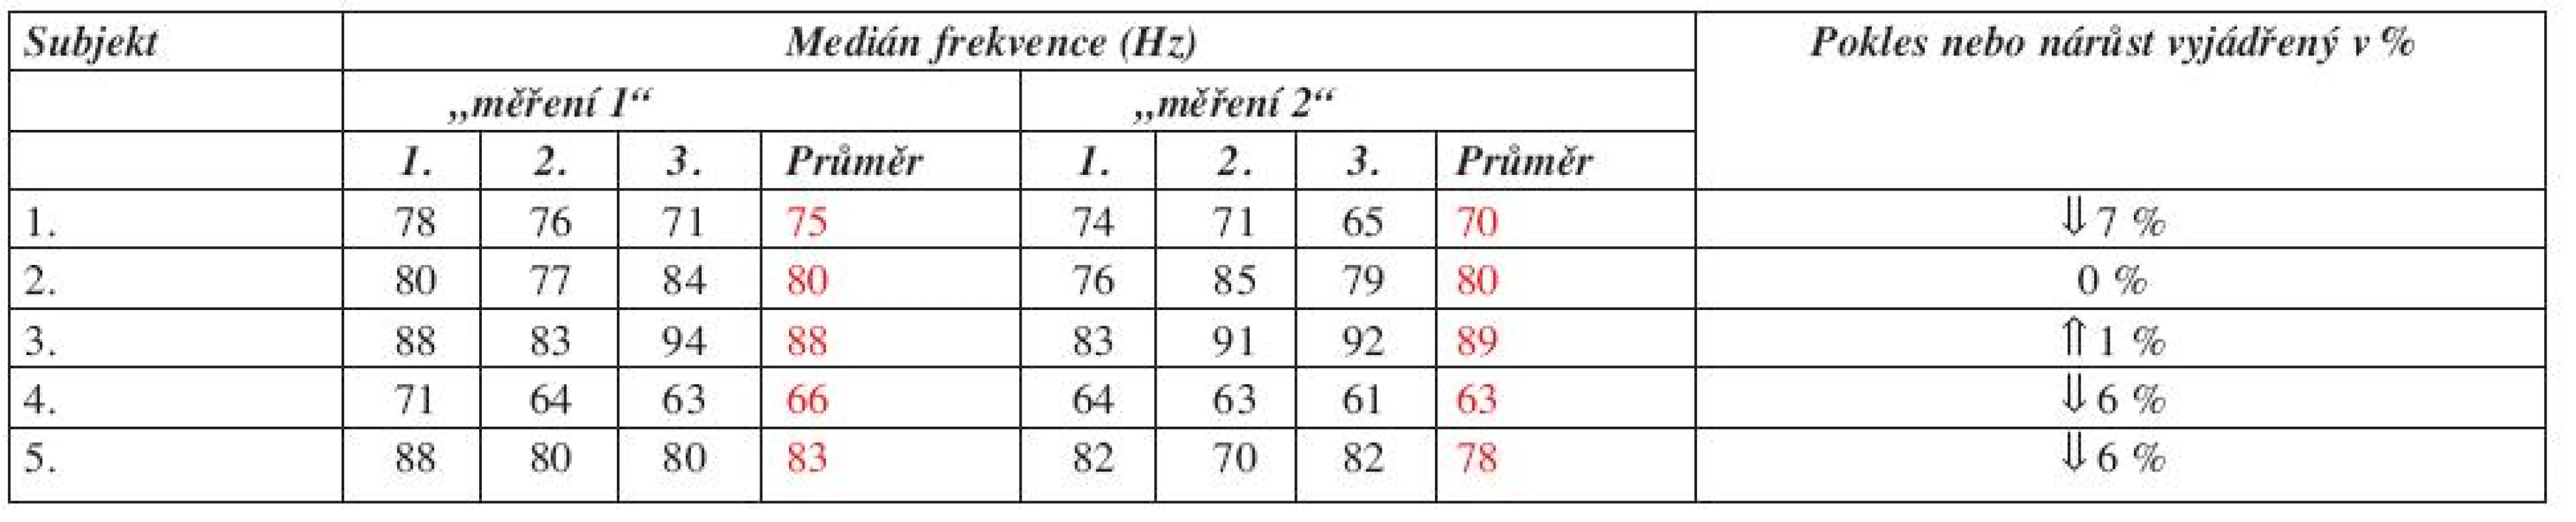 Hodnoty mediánu frekvence u m. flexor carpi ulnaris.